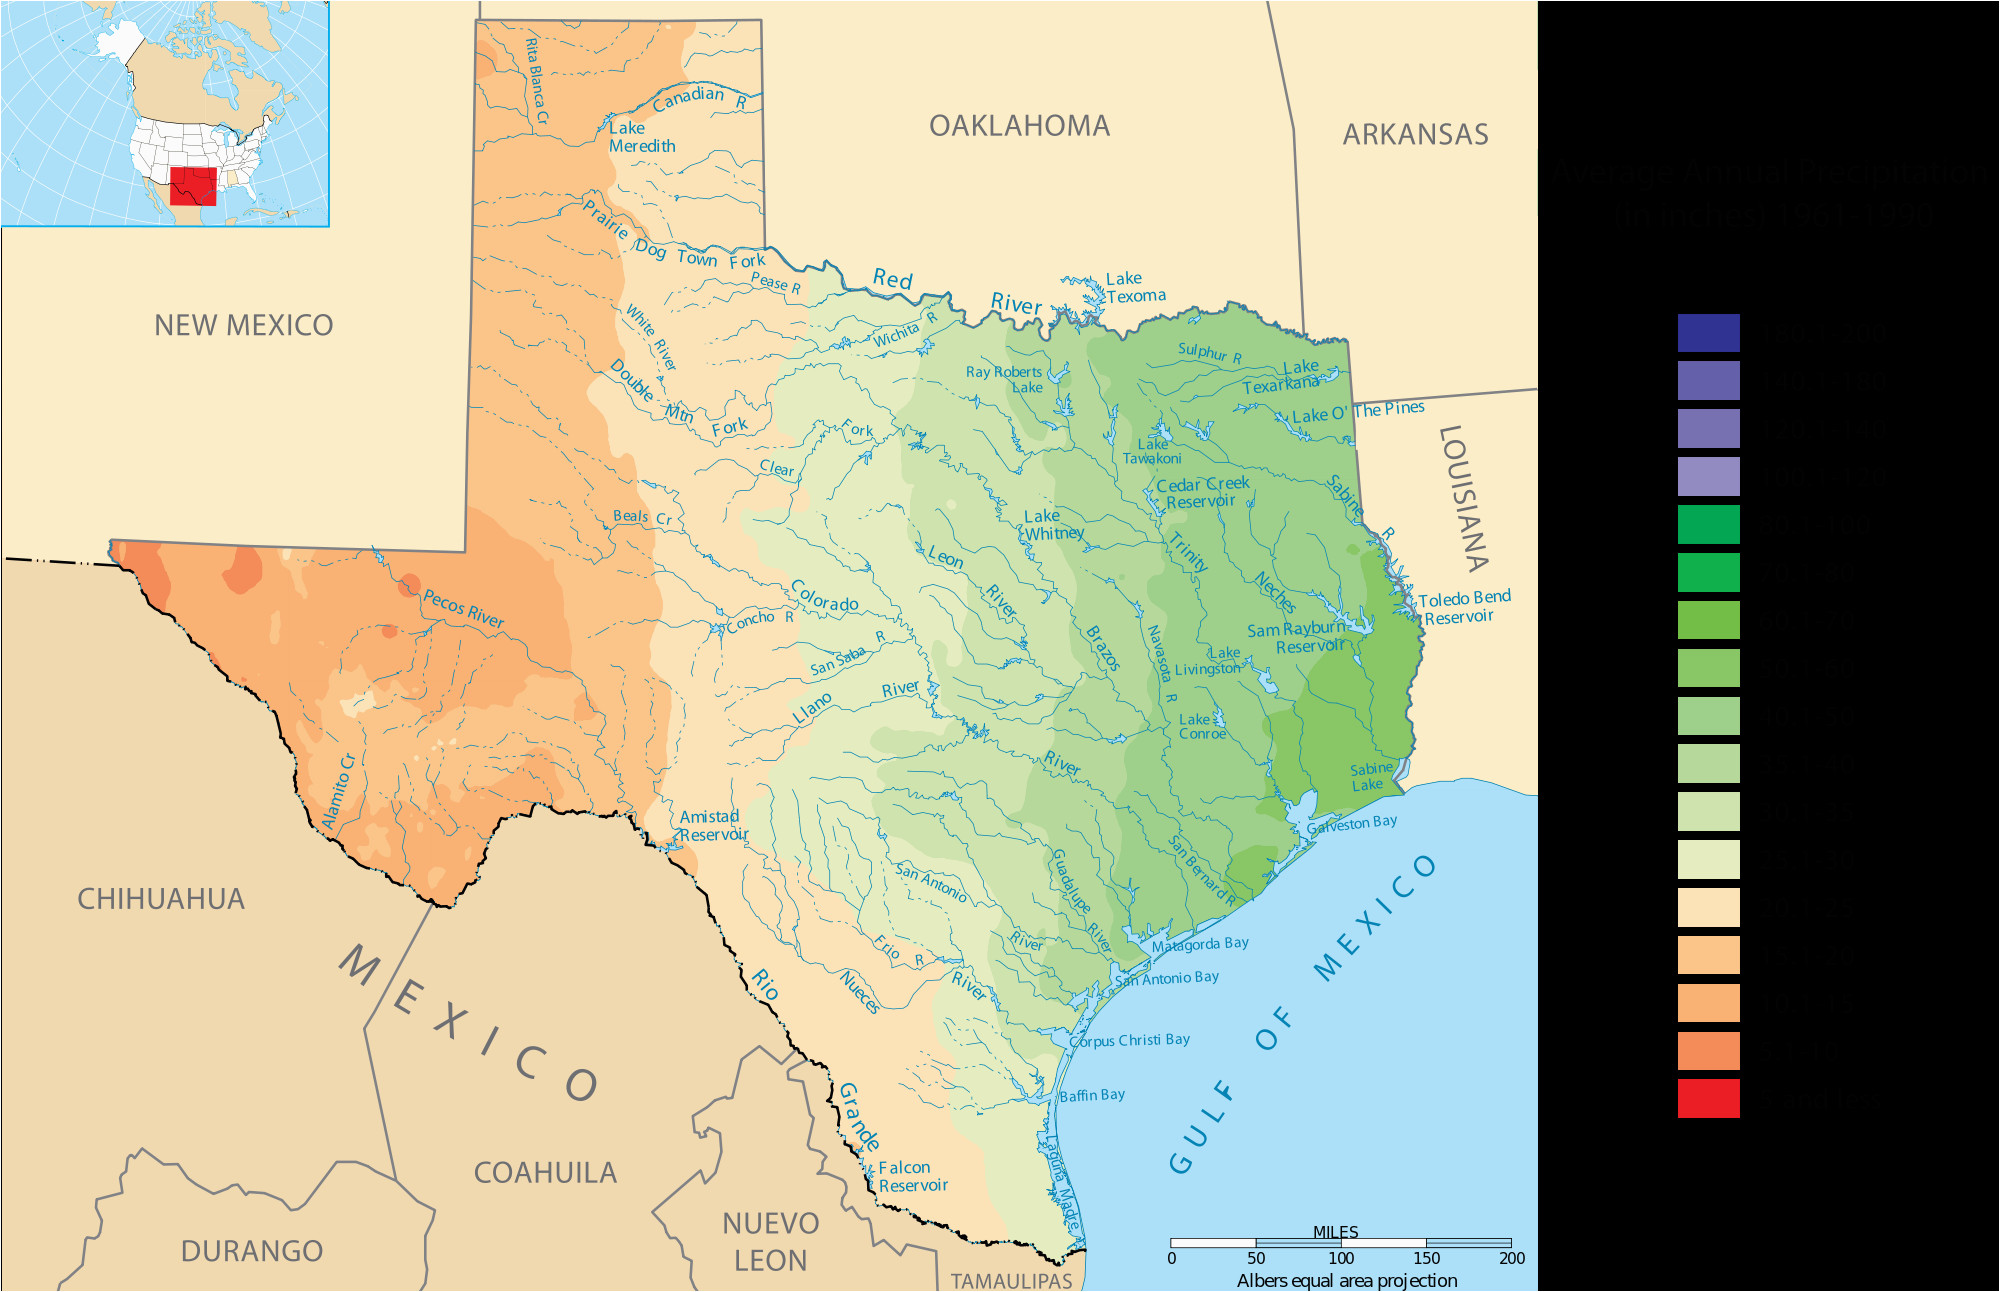 texas average rainfall map business ideas 2013